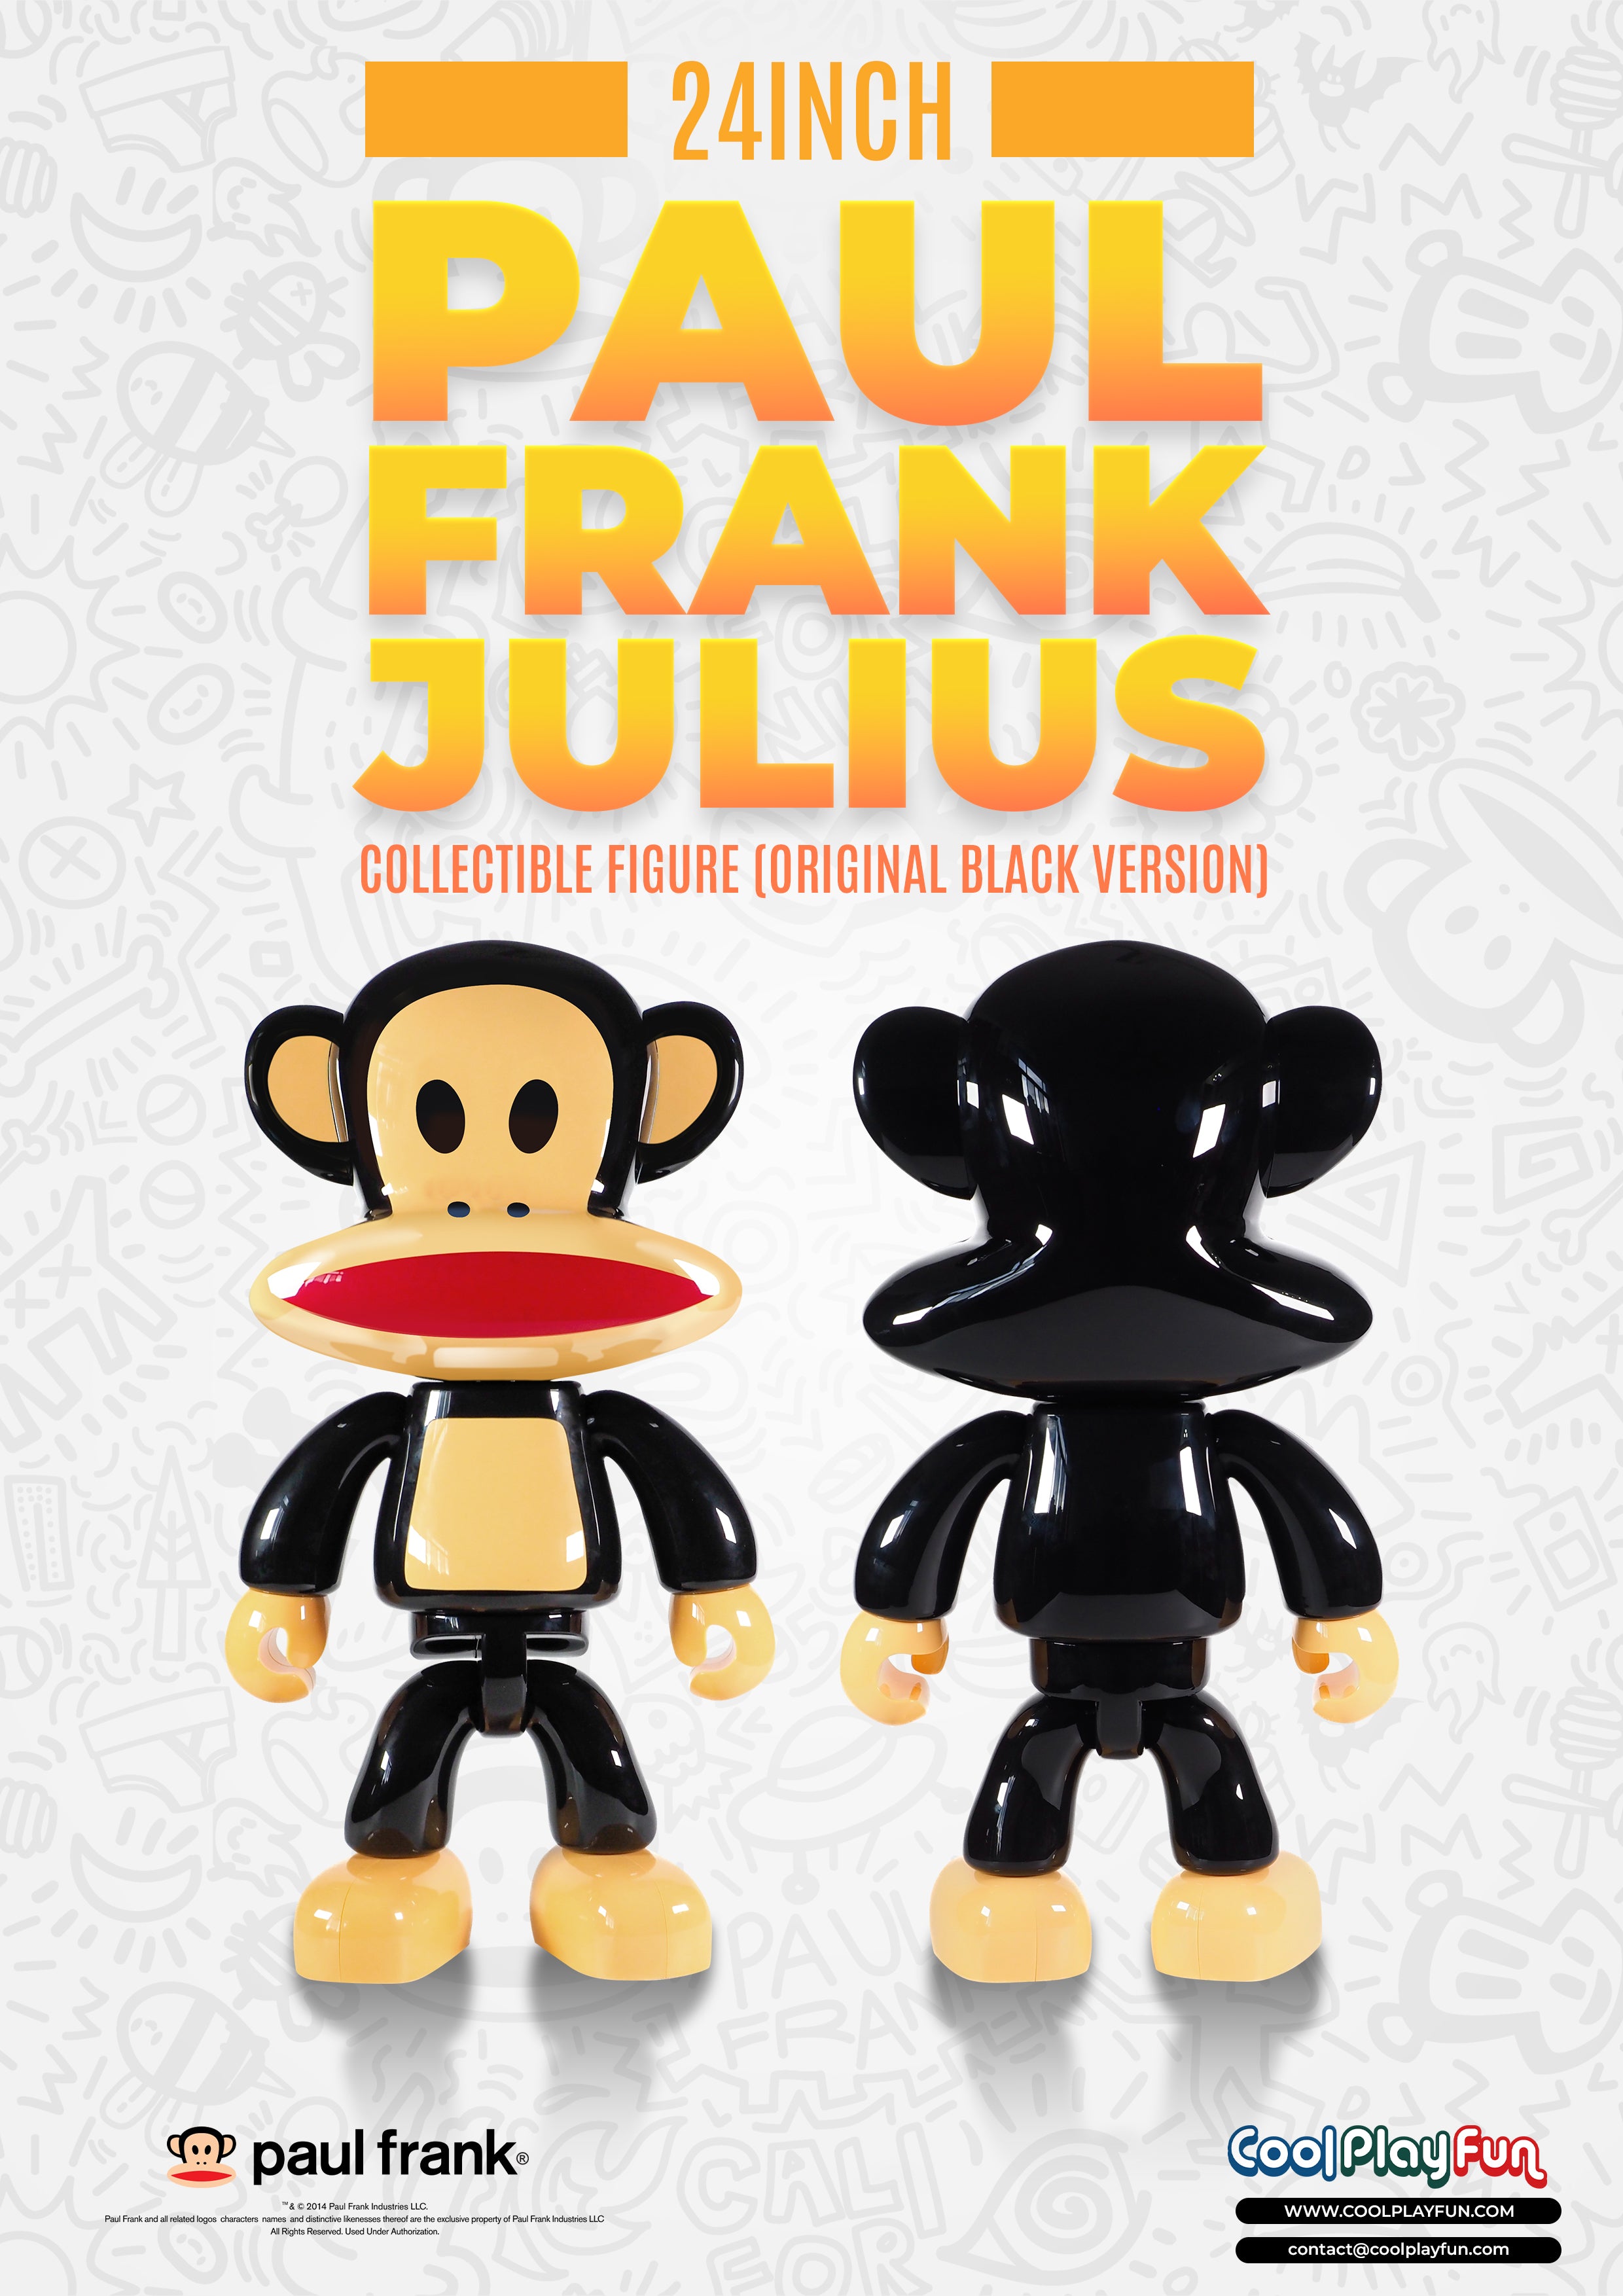 Paul Frank Julius 24-inch Collectible Figure (Original Black Version)